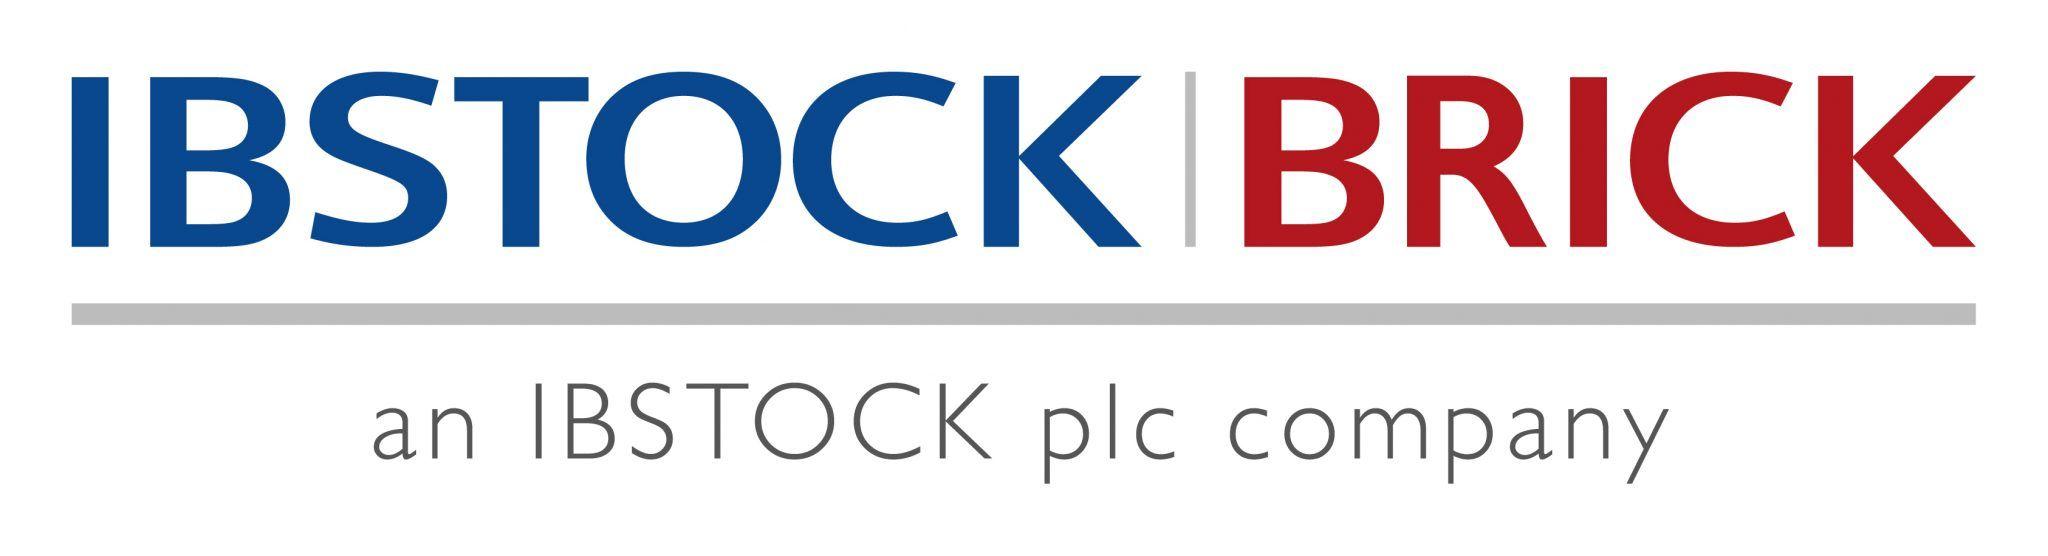 Brick Company Logo - Brick Product Solutions